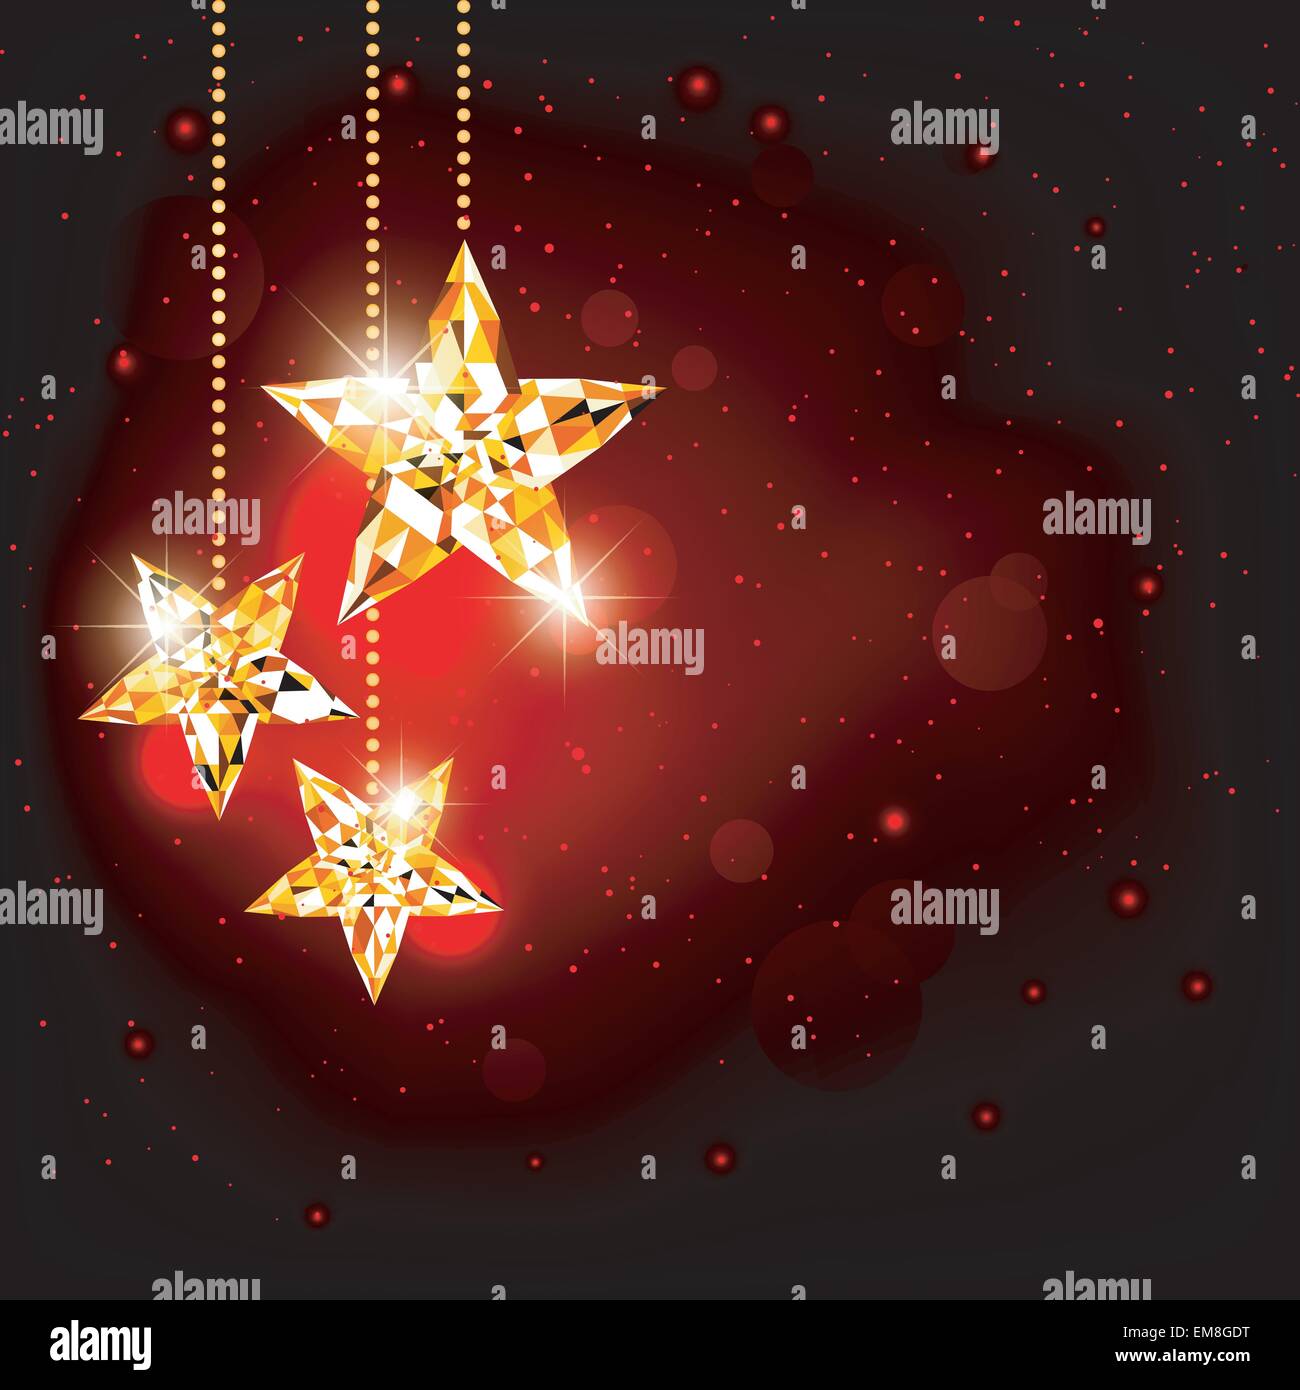 Christmas Polygon Star Background Stock Vector